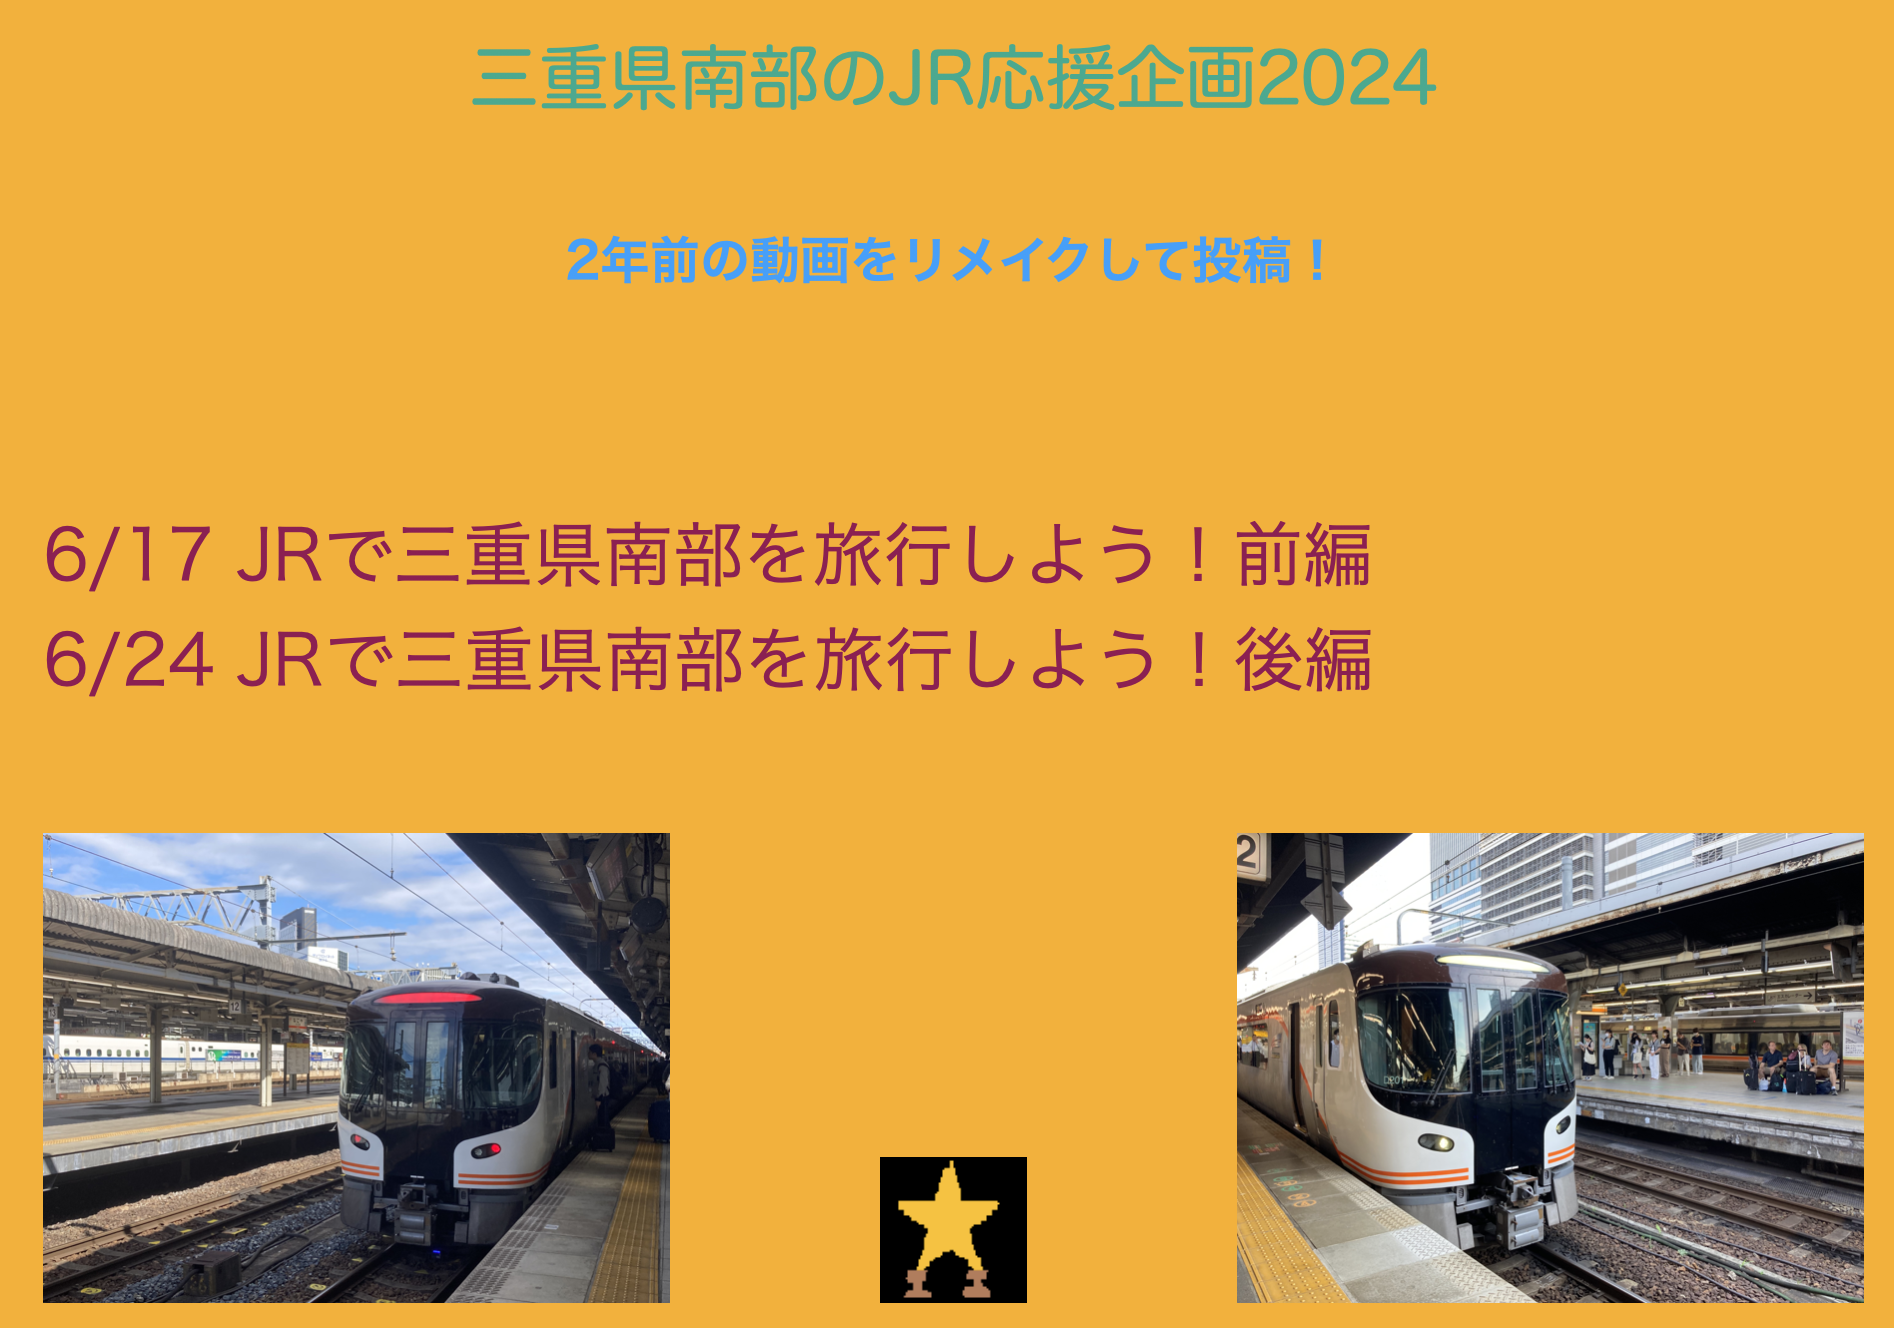 三重県南部のJR応援2024